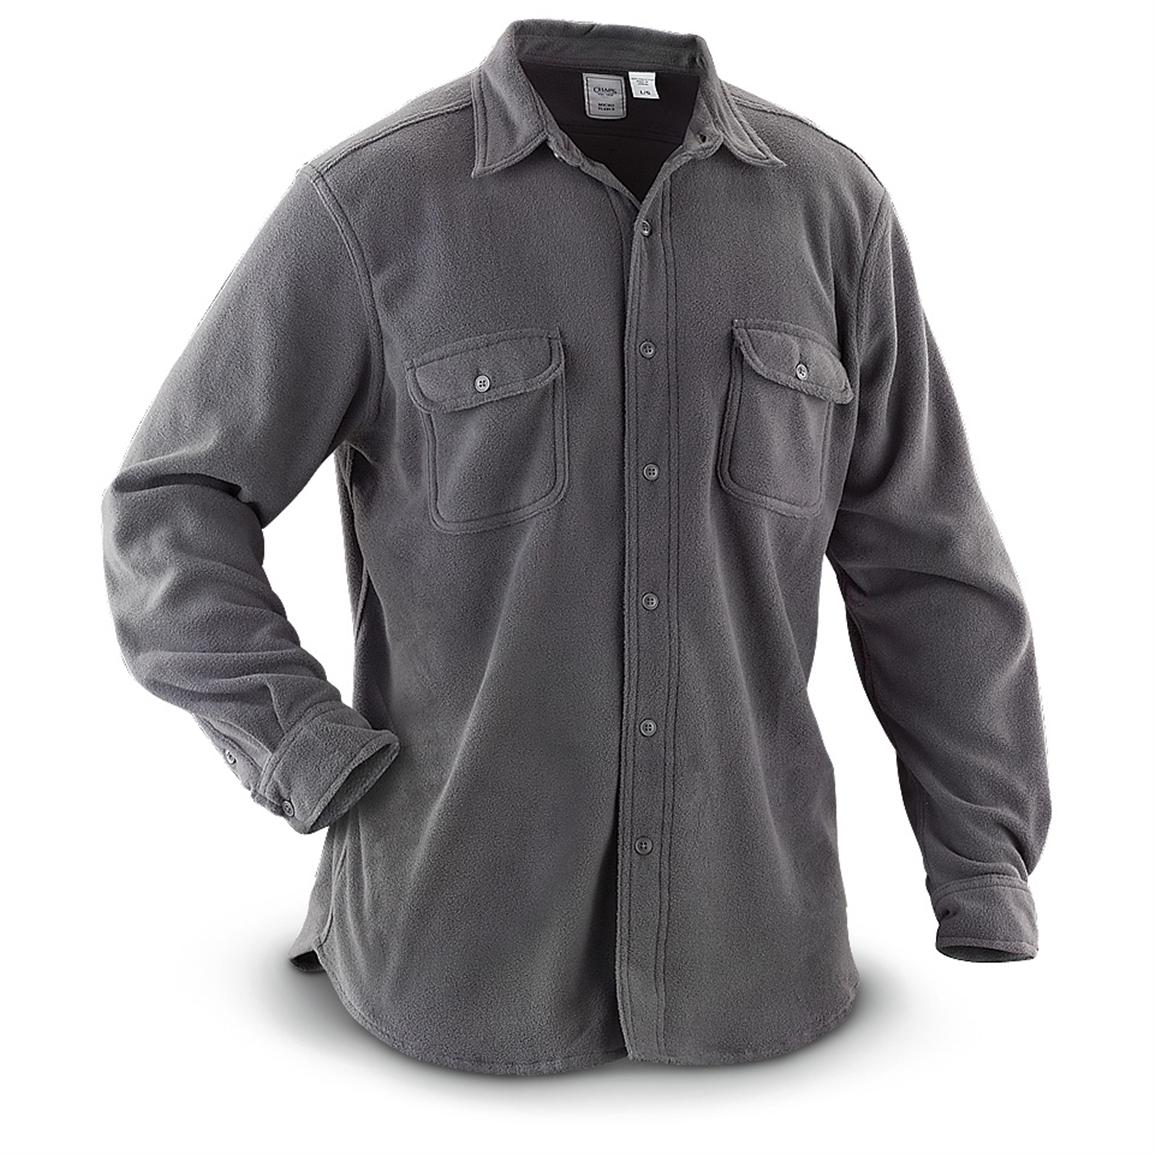 Chaps® Microfleece Shirt - 296592, Shirts at Sportsman's Guide